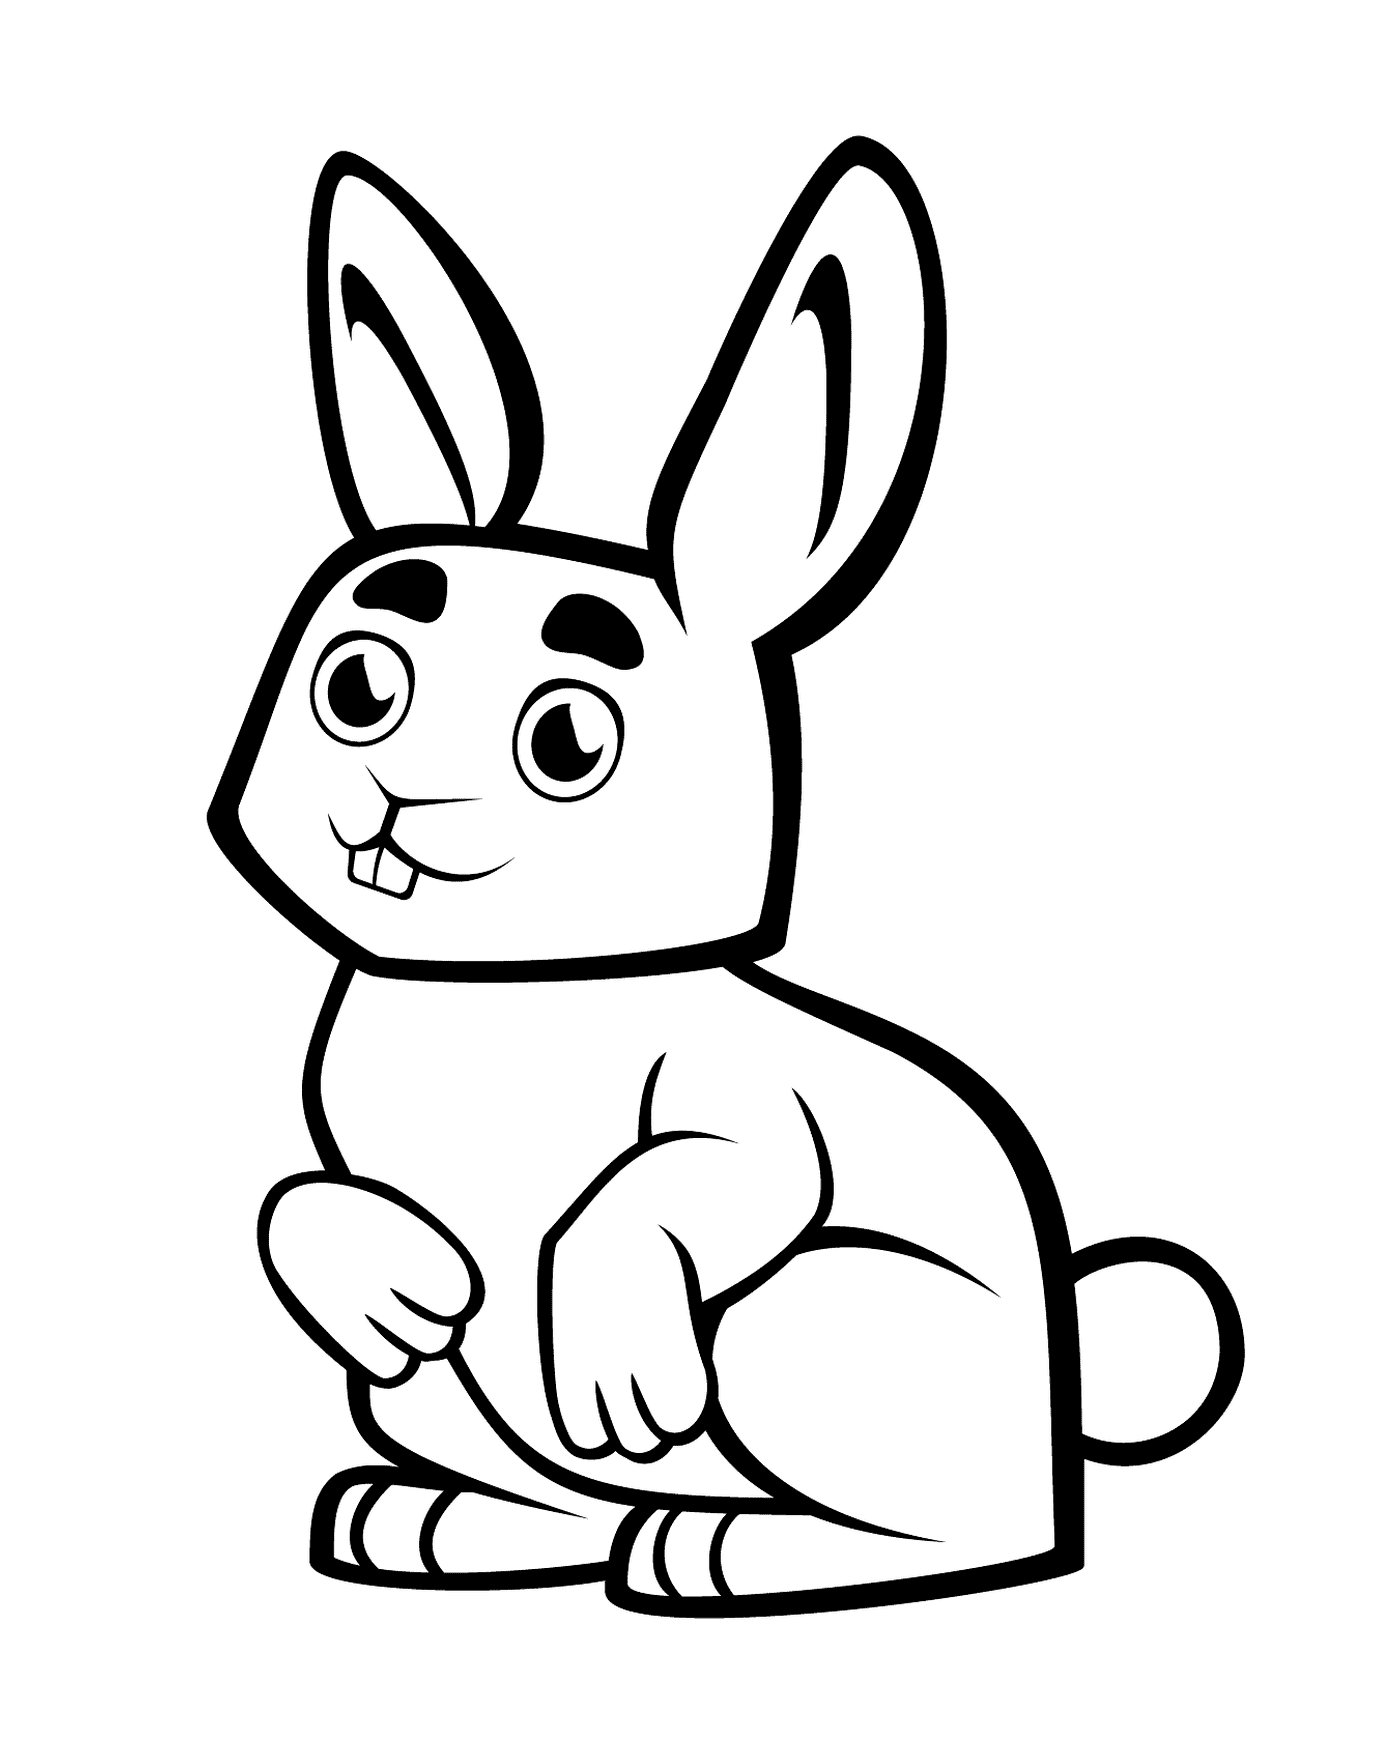  a cute little rabbit with a carrot 